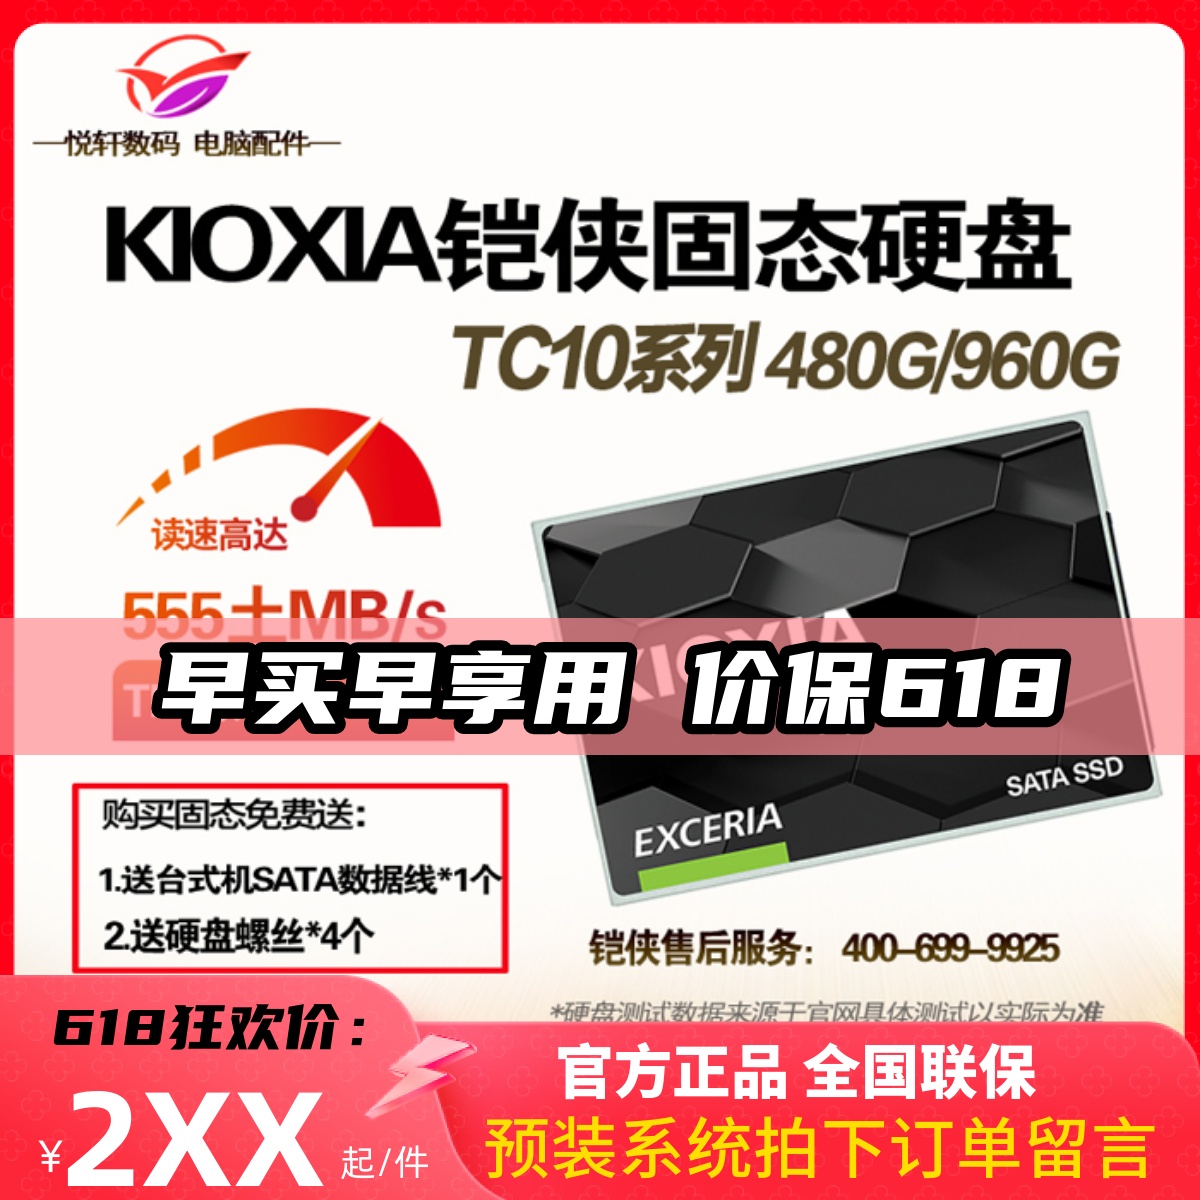 Kioxia/铠侠 TC10 480G 960G SSD固态硬盘SATA/EXCERIA台式机通用